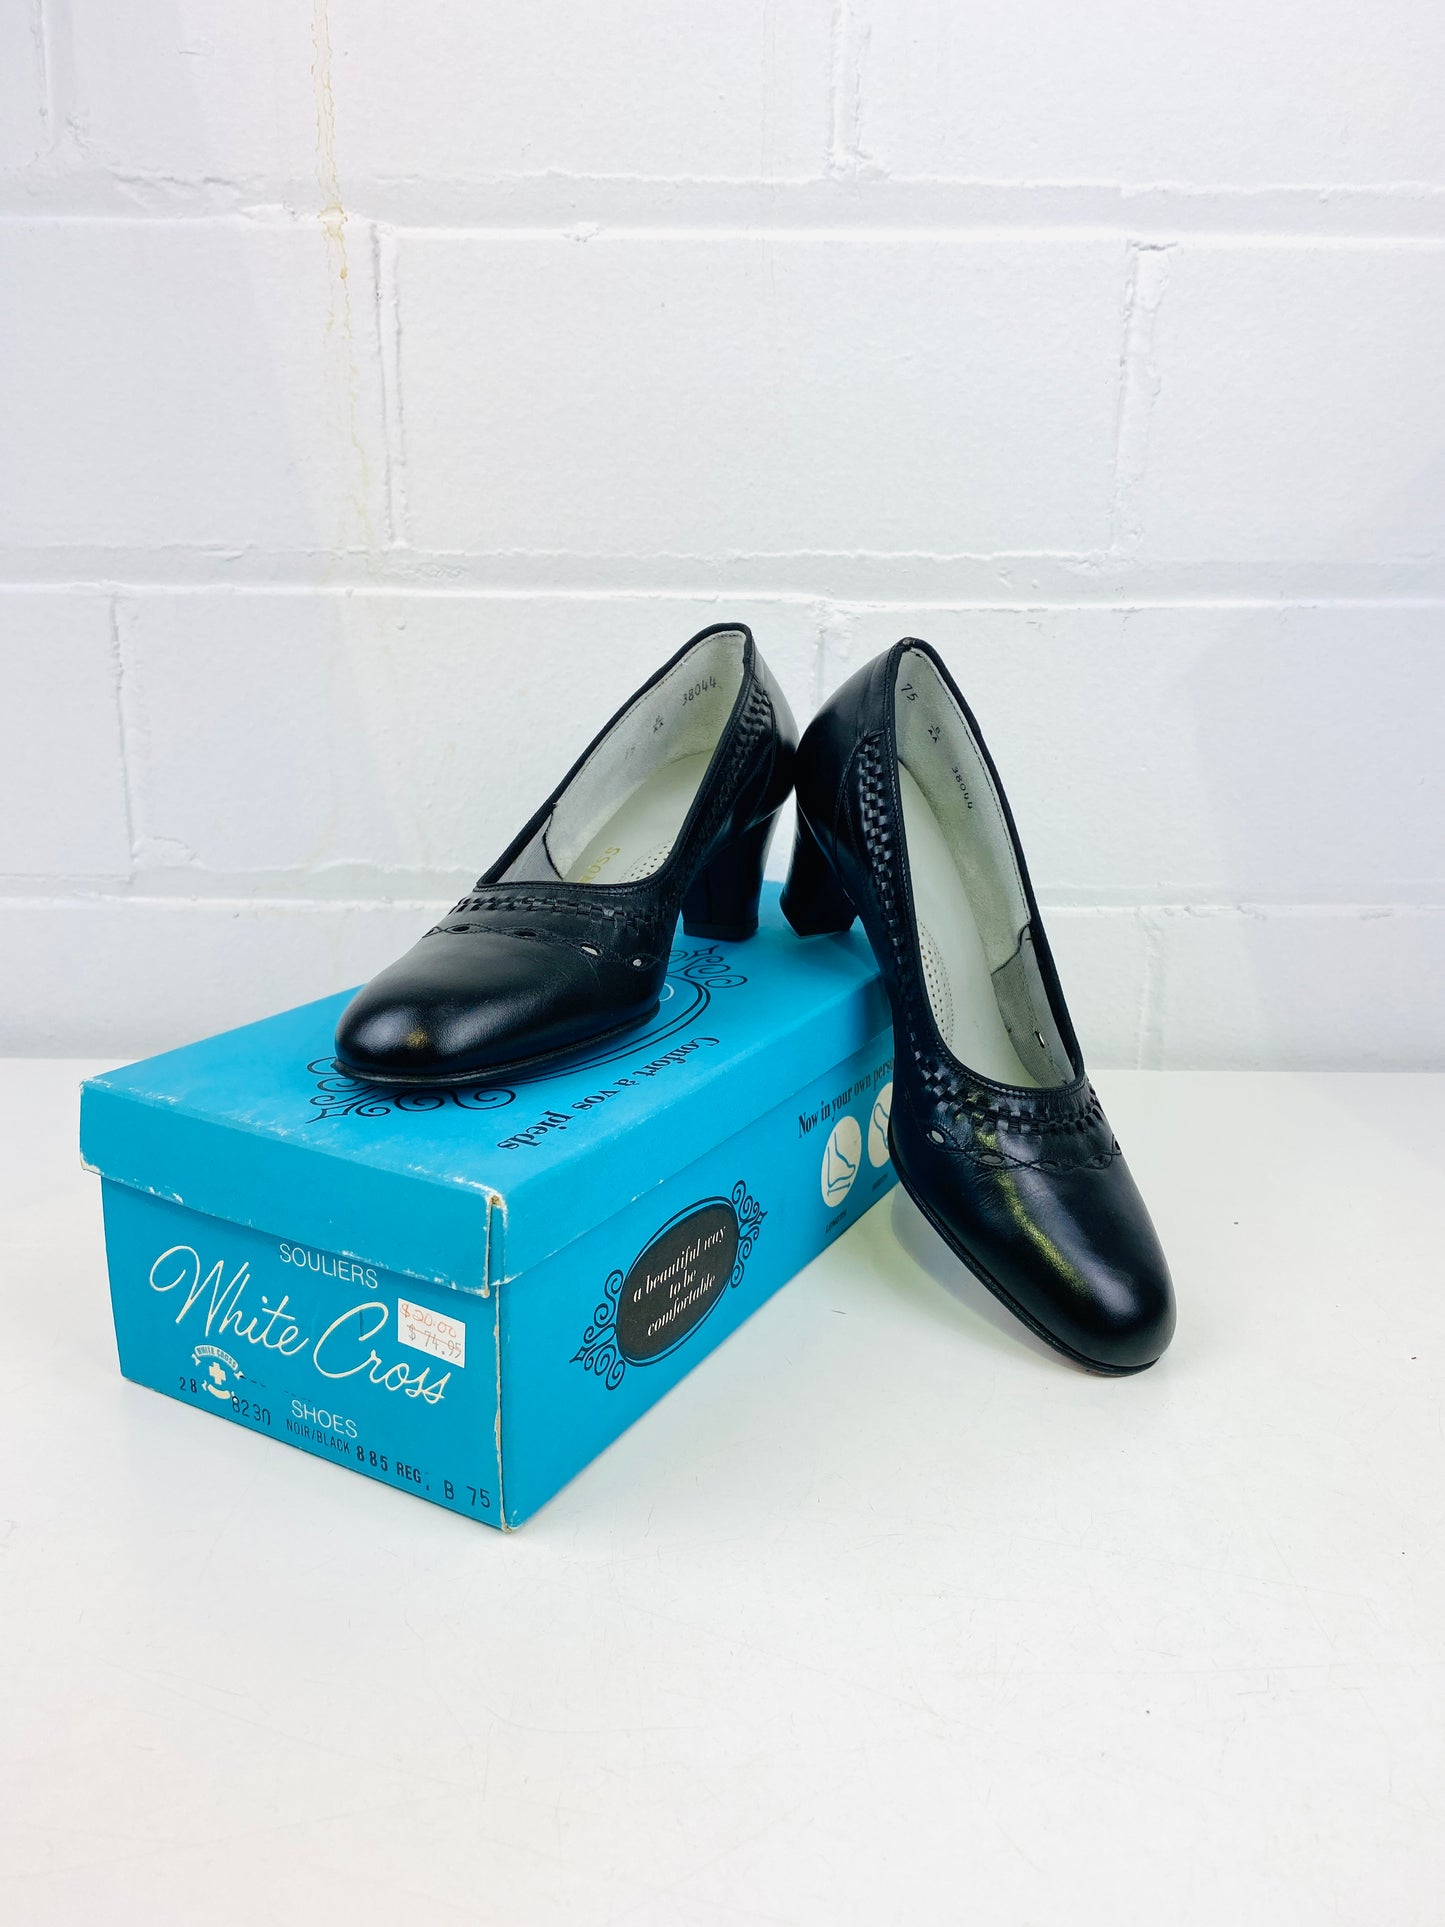 Vintage Deadstock Shoes, Women's 1980s Black Leather Mid-Heel Pumps, NOS, 8230